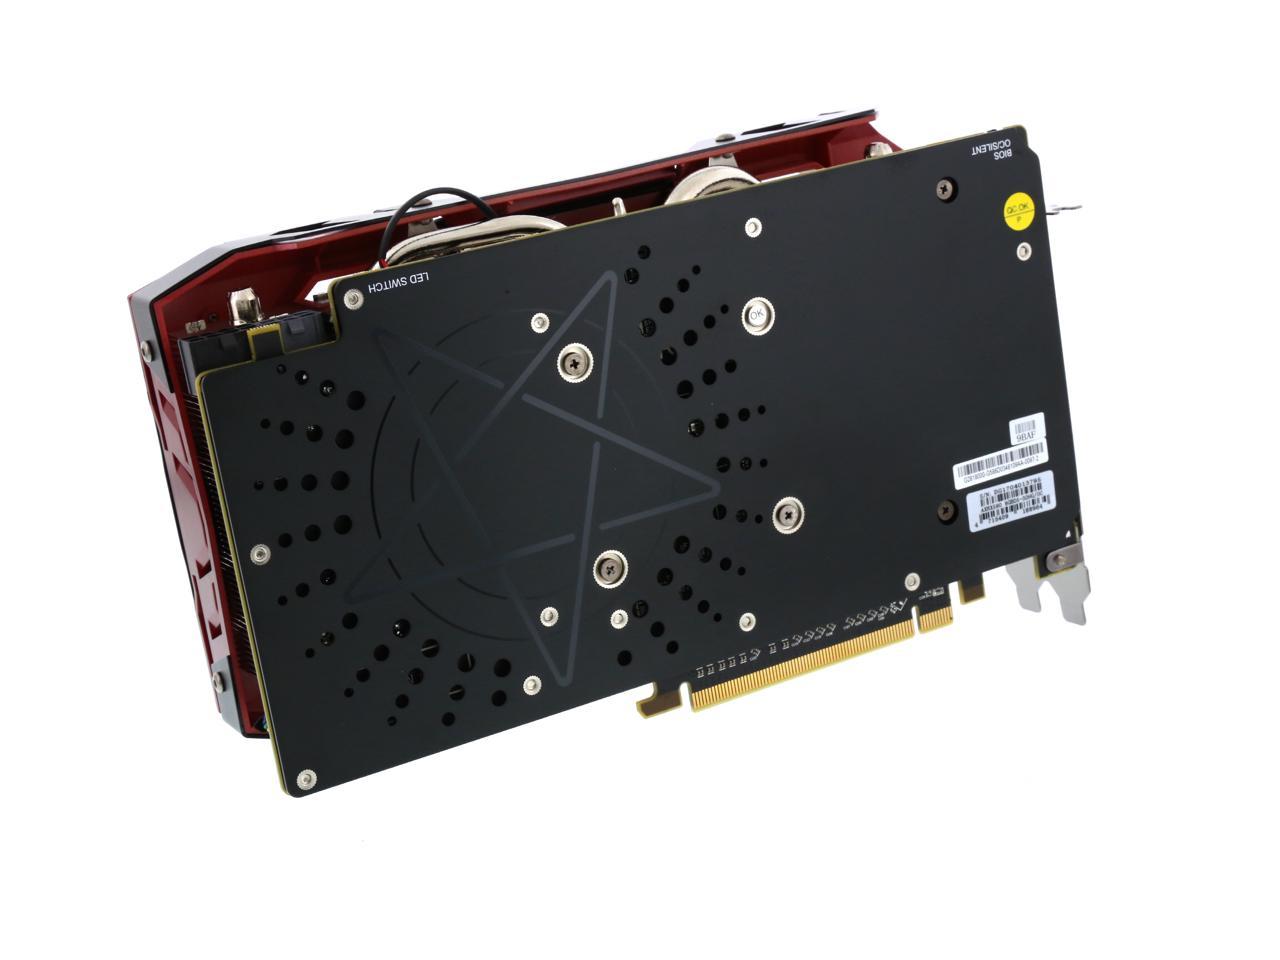 PowerColor RED DEVIL Golden Radeon RX 580 Video Card AXRX 580 8GBD5-3DHG/OC  - Newegg.com